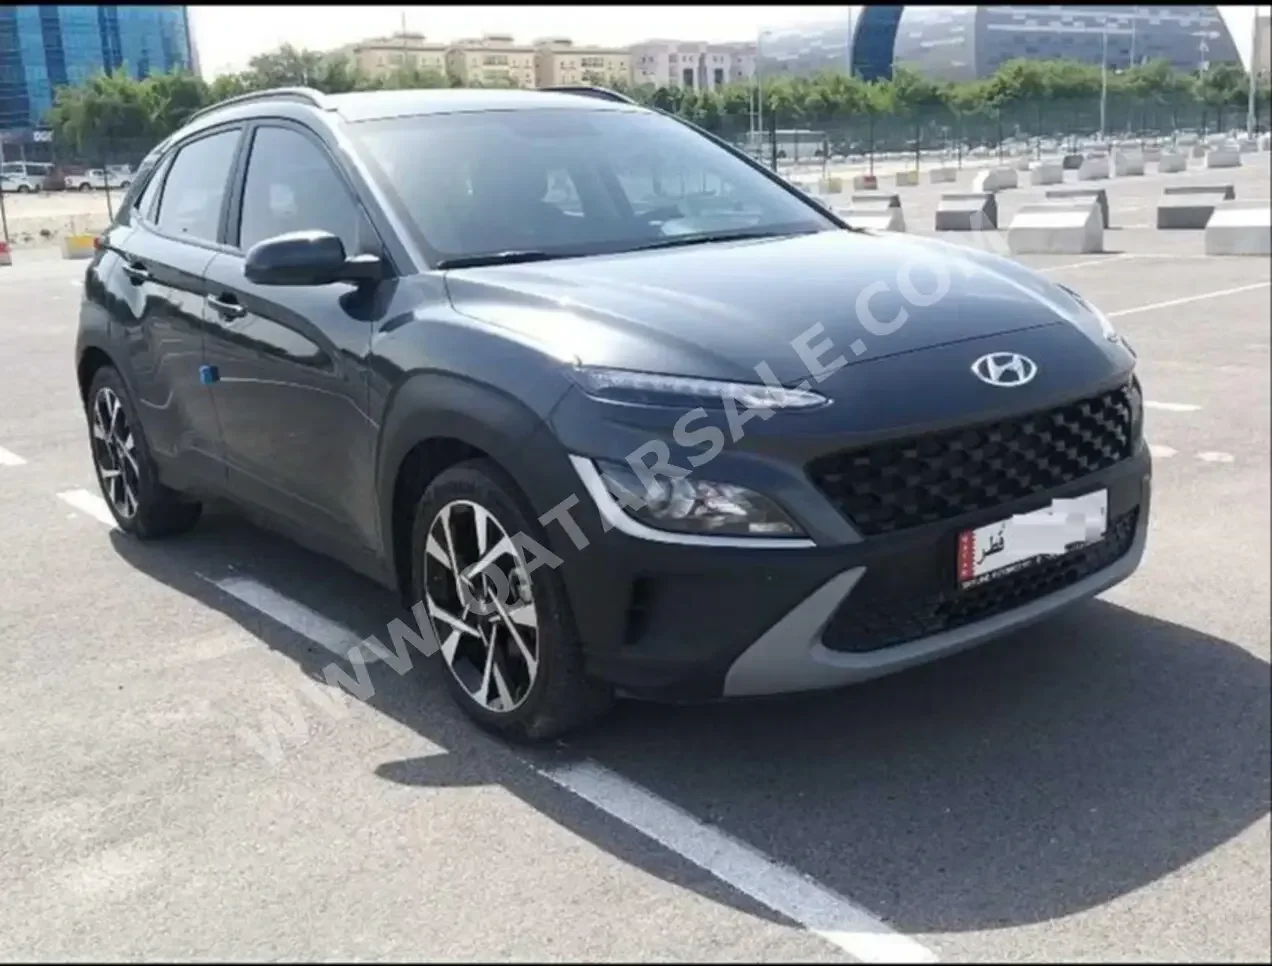 Hyundai  Kona  2022  Automatic  14,500 Km  4 Cylinder  All Wheel Drive (AWD)  SUV  Gray  With Warranty